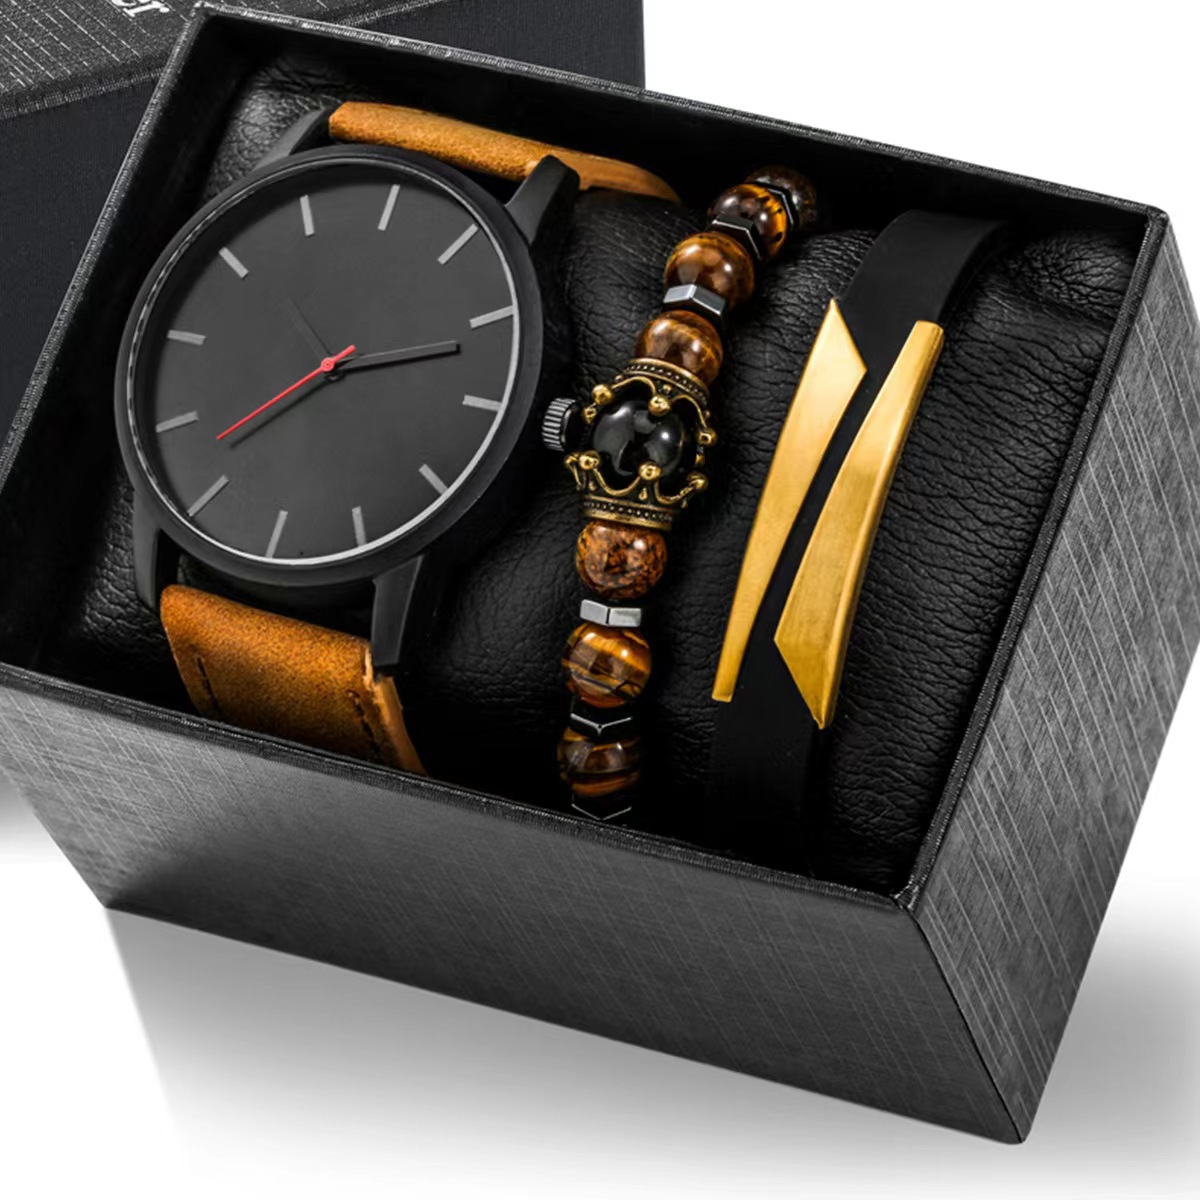 10:6 watch, bracelet and box